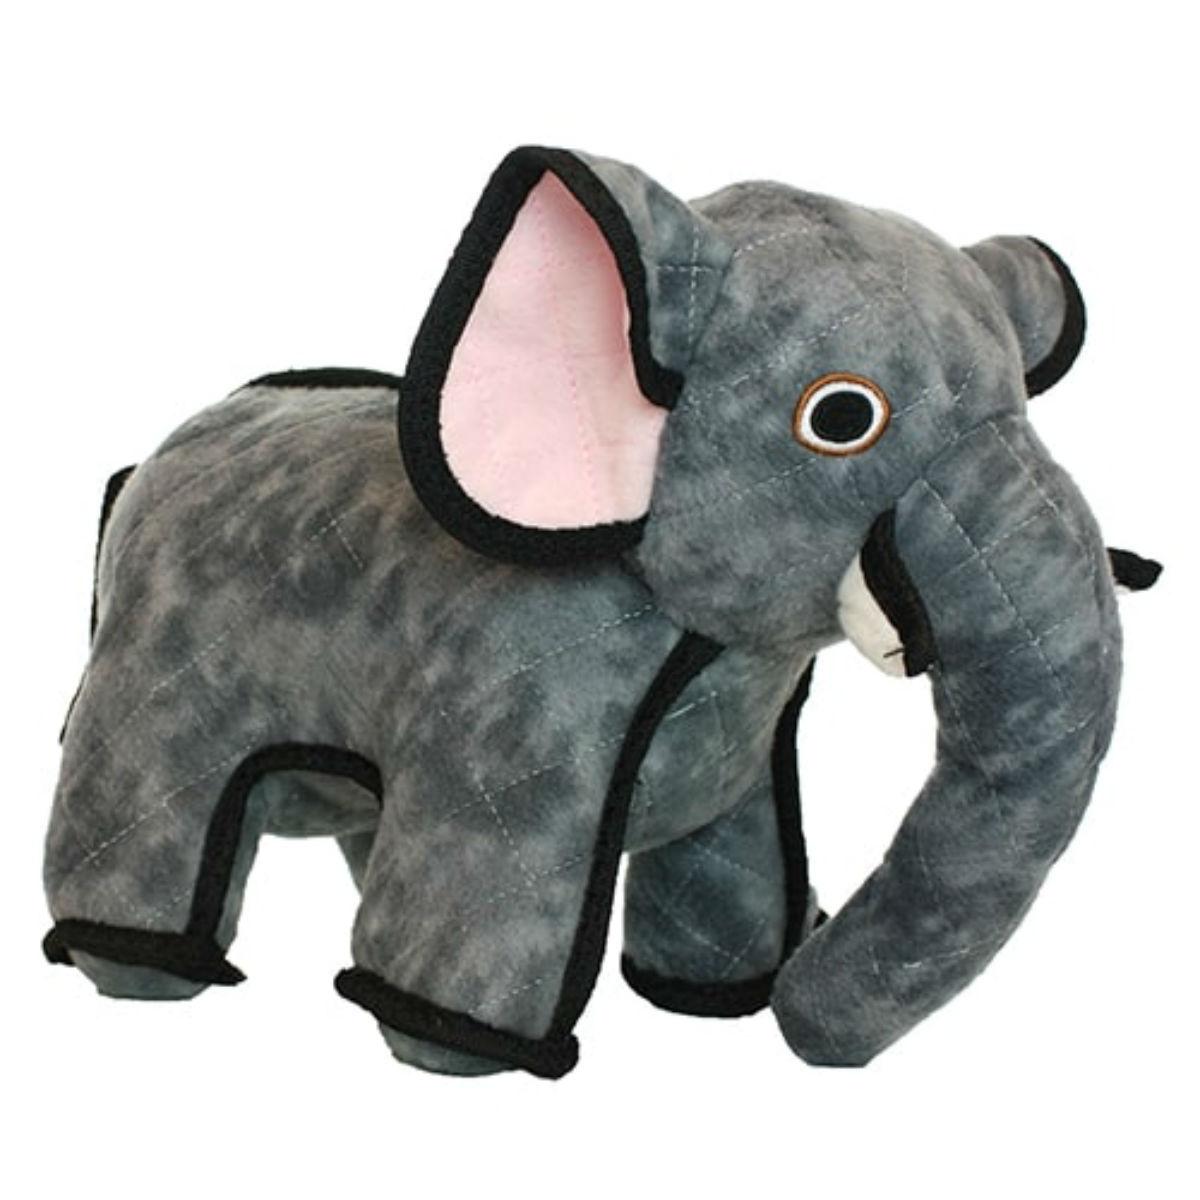 Tuffy Zoo Series Dog Toy - Emery the Elephant